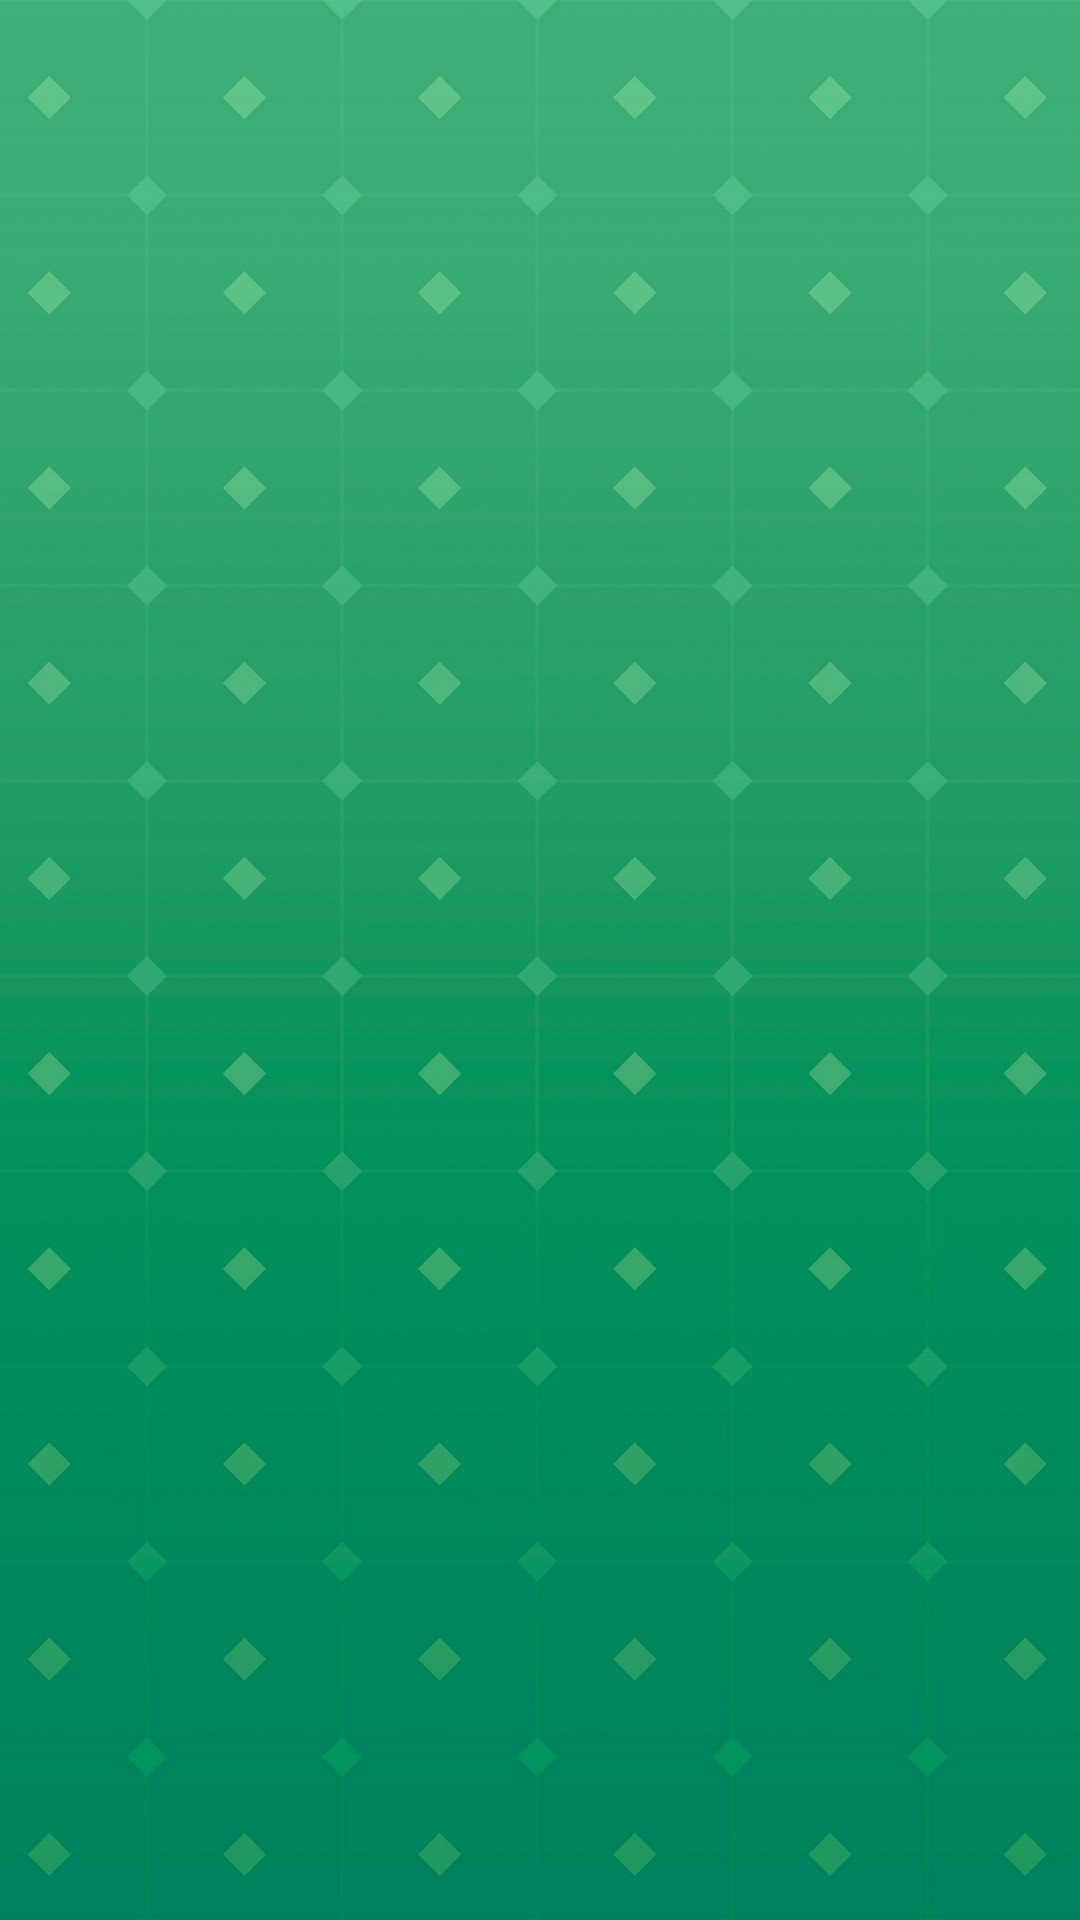 Green iPhone wallpaper